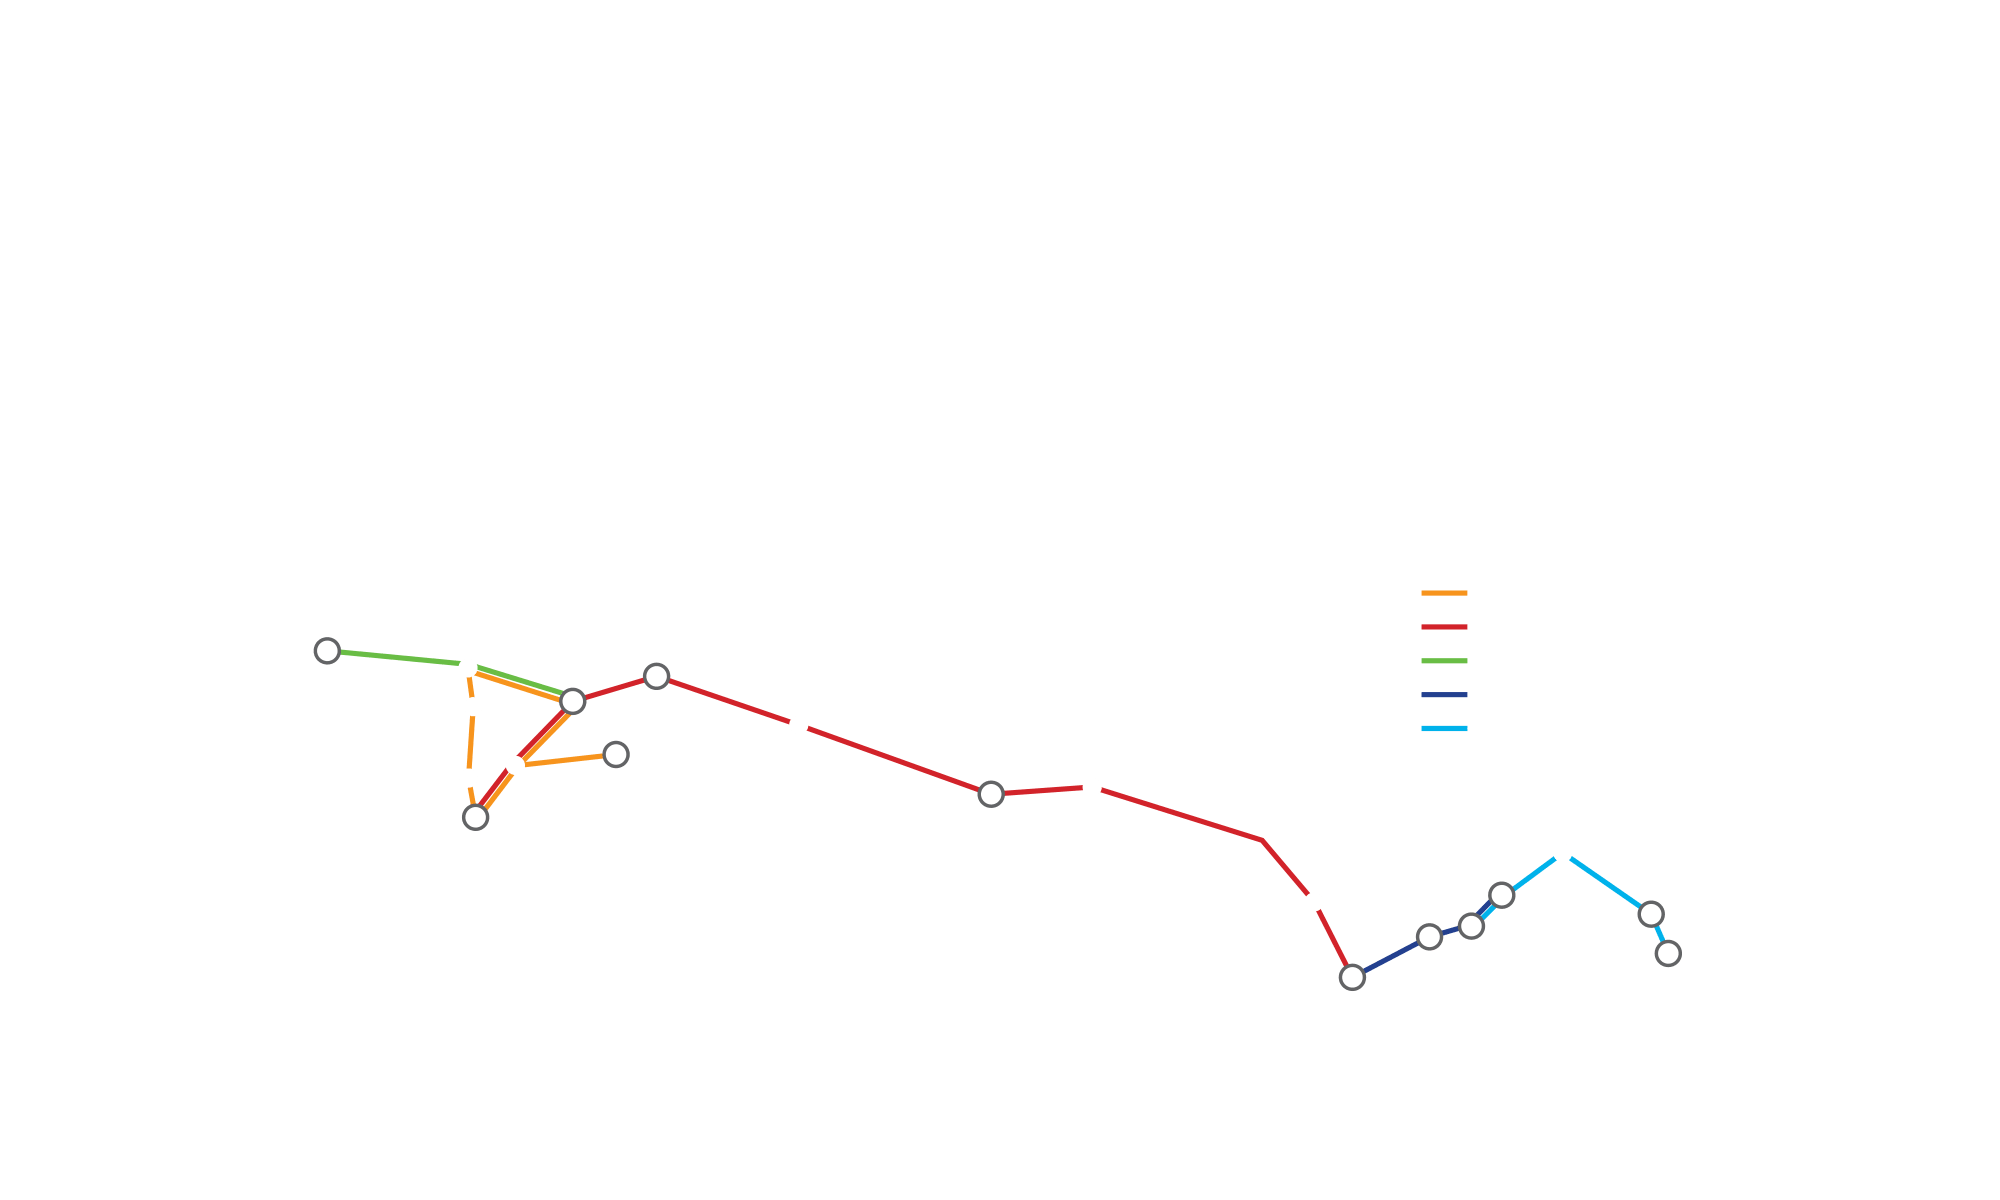 railroad tours across canada